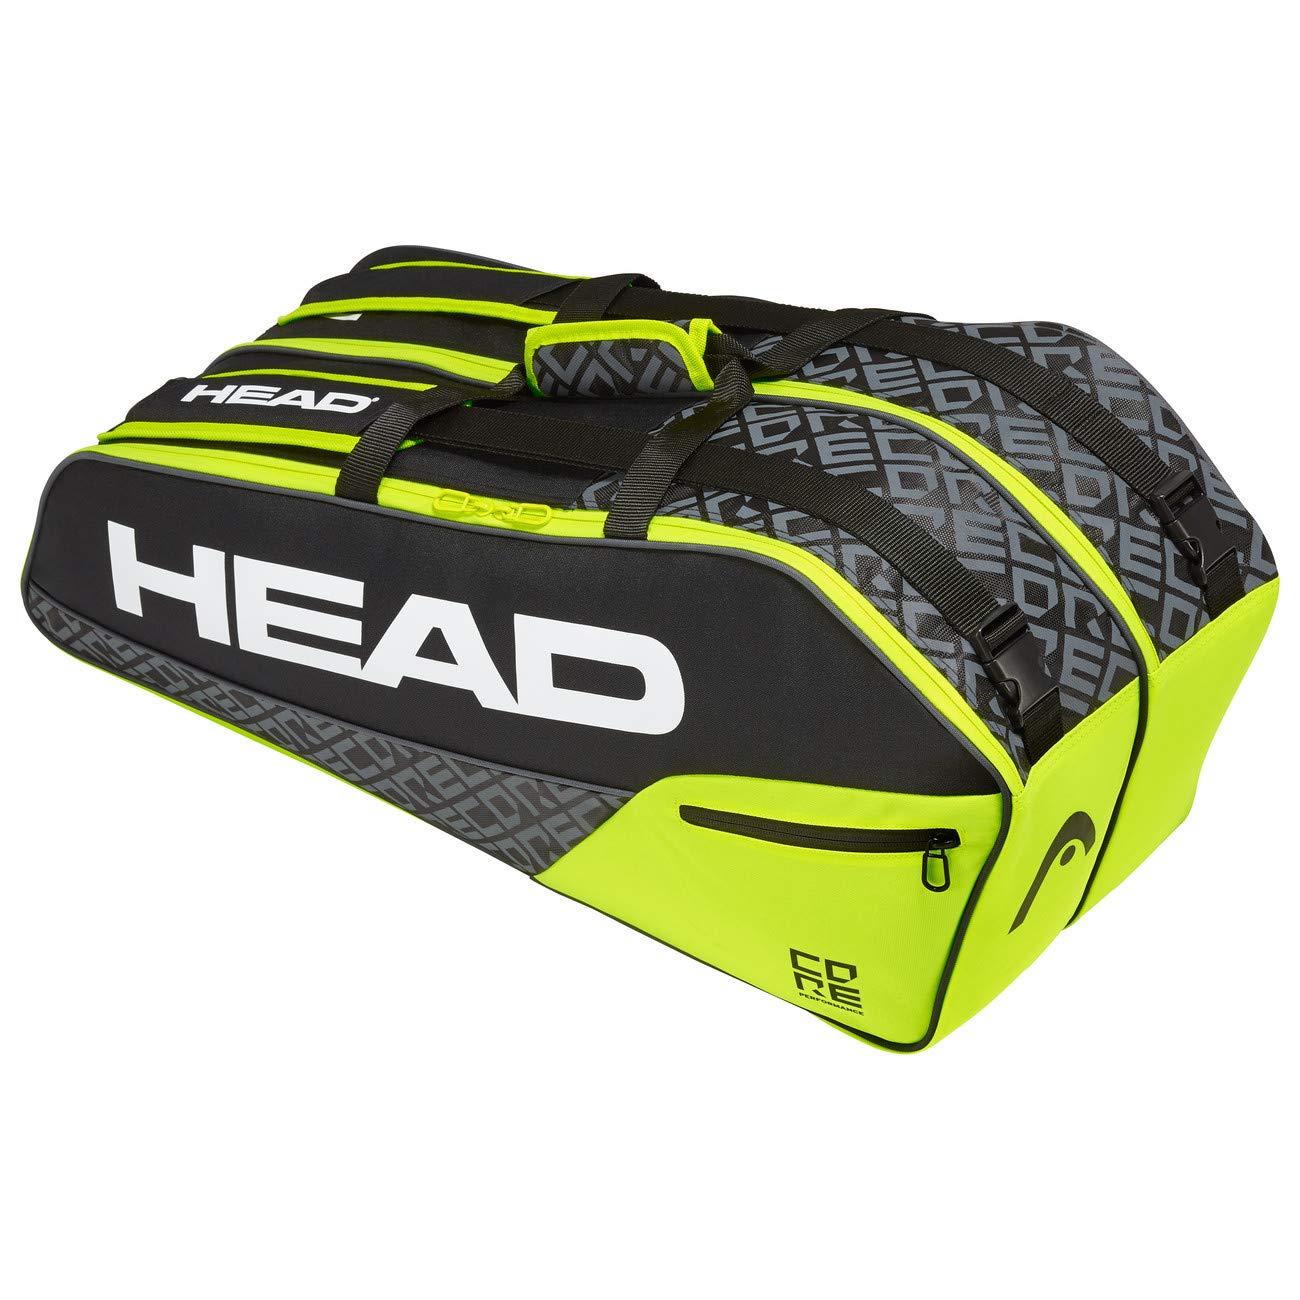 Head Core 6 Racquet Pro Combi Tennis Kitbag - Black/Neon Yellow - Best Price online Prokicksports.com